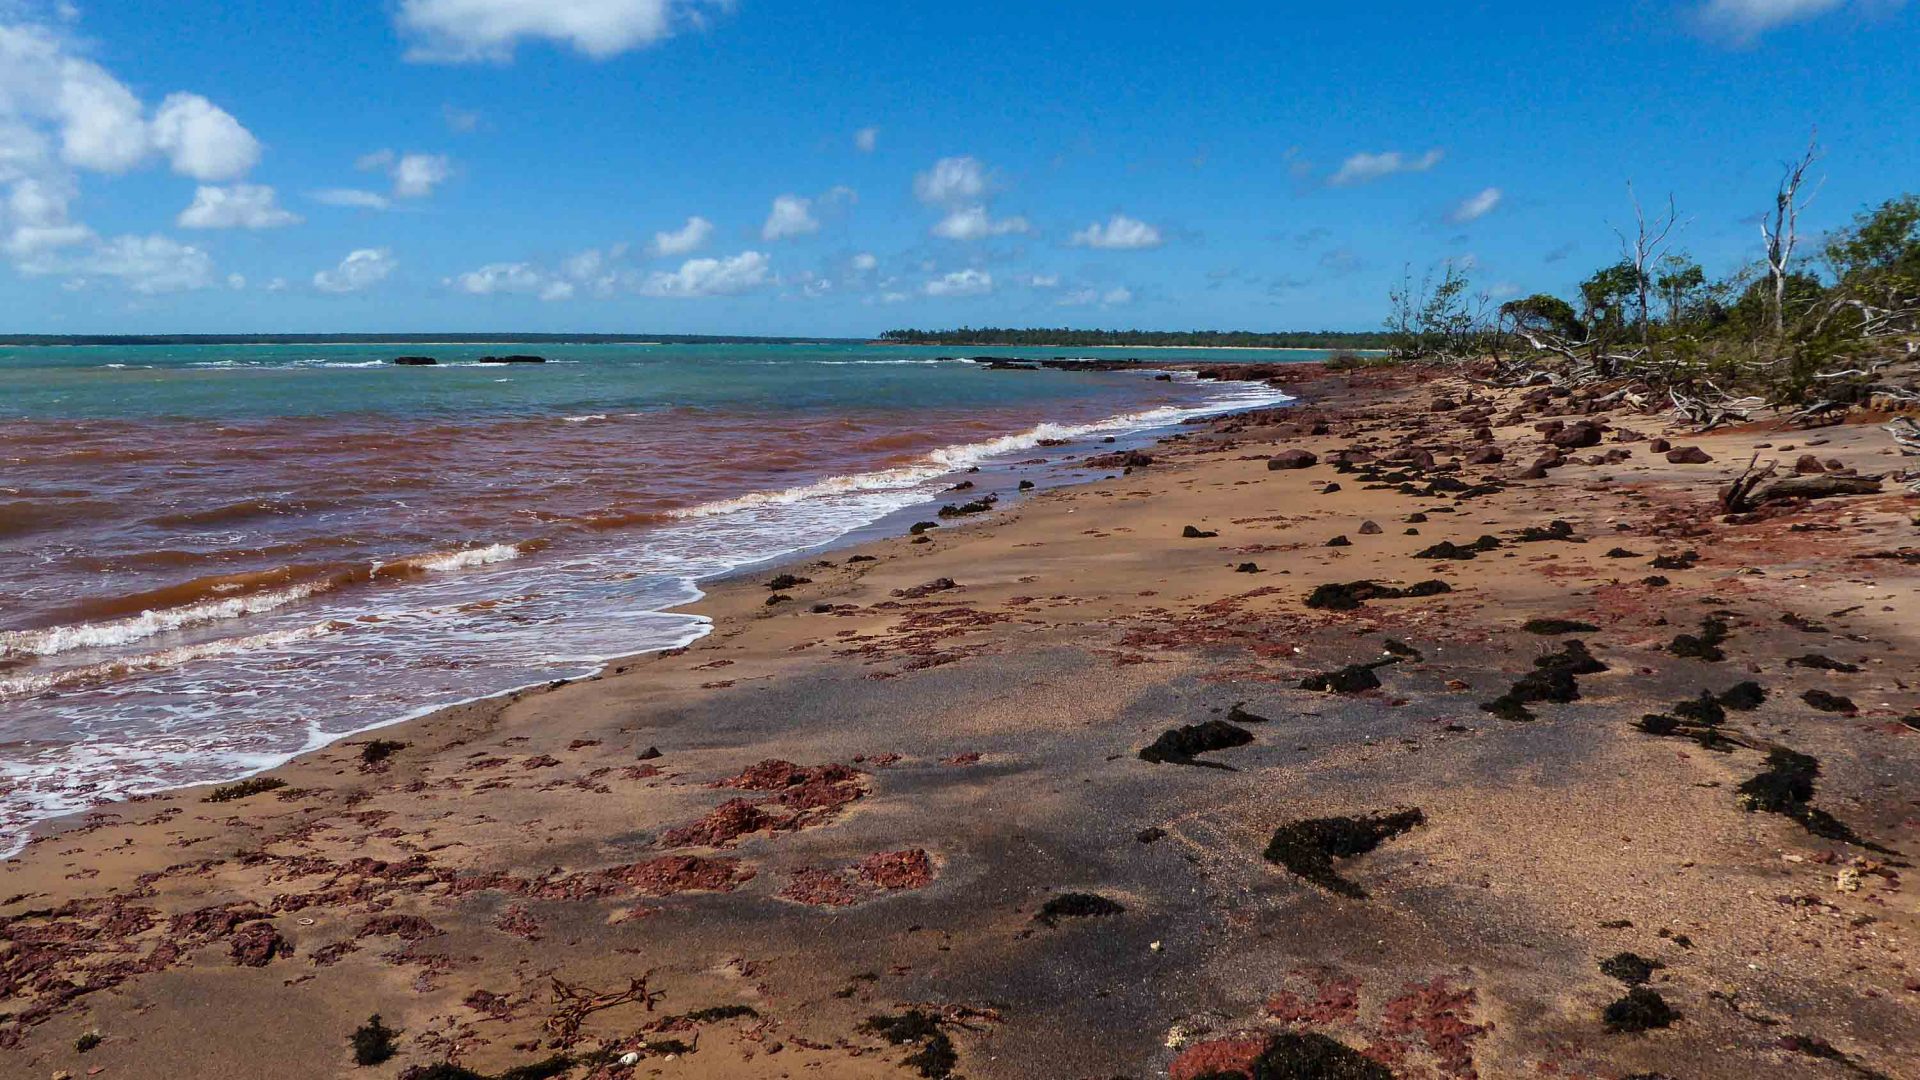 The red rocks of Australia's Cobourg Peninsula.